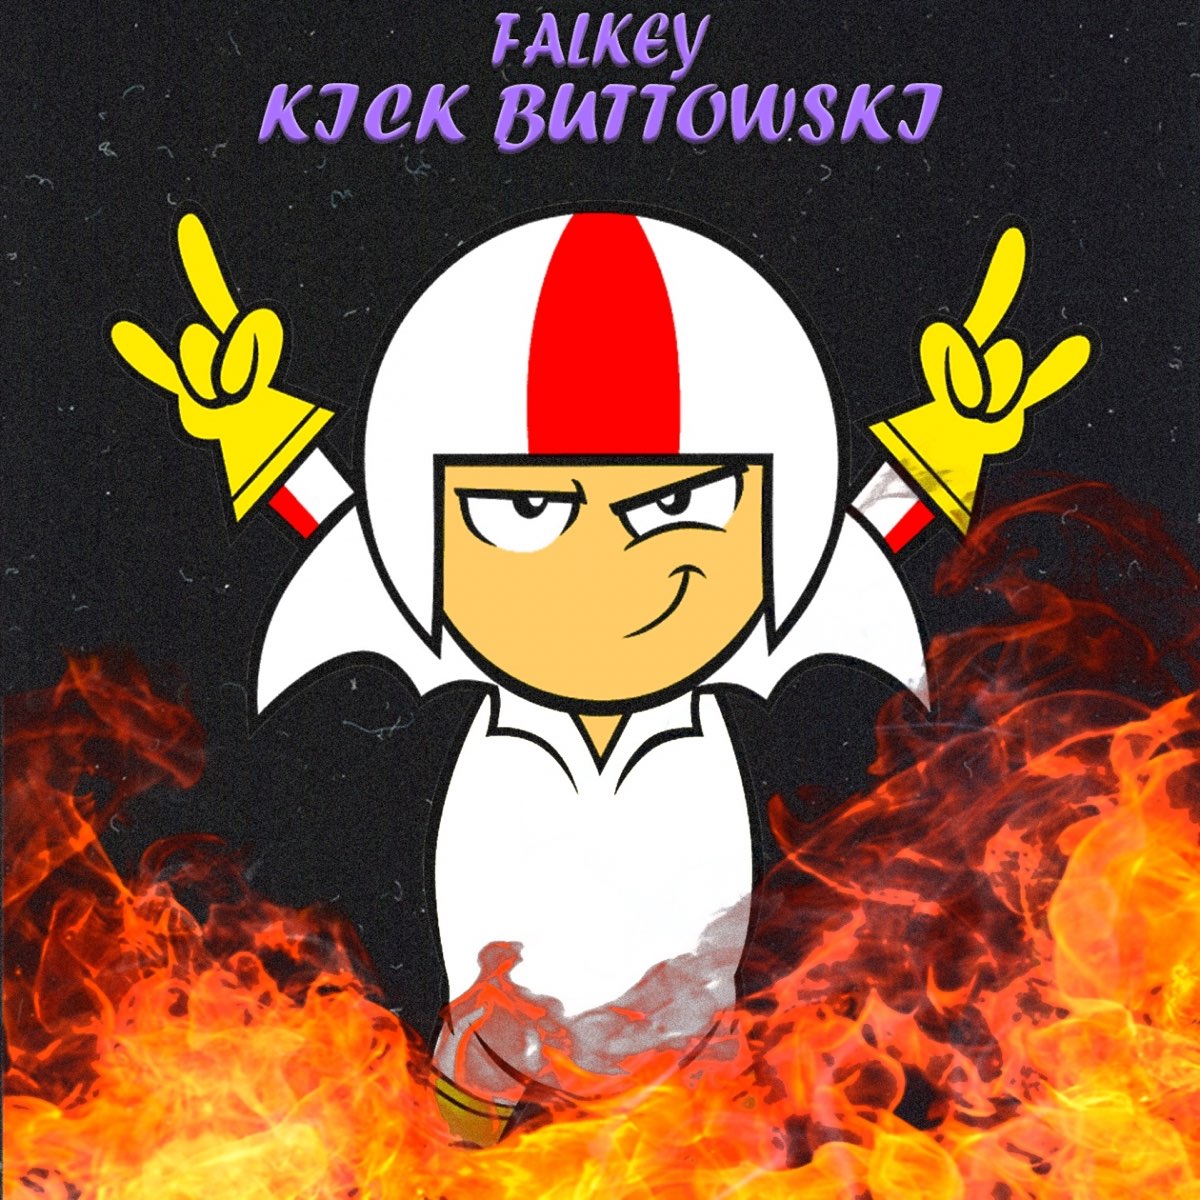 Kick Buttowski - Single by FalKey on Apple Music